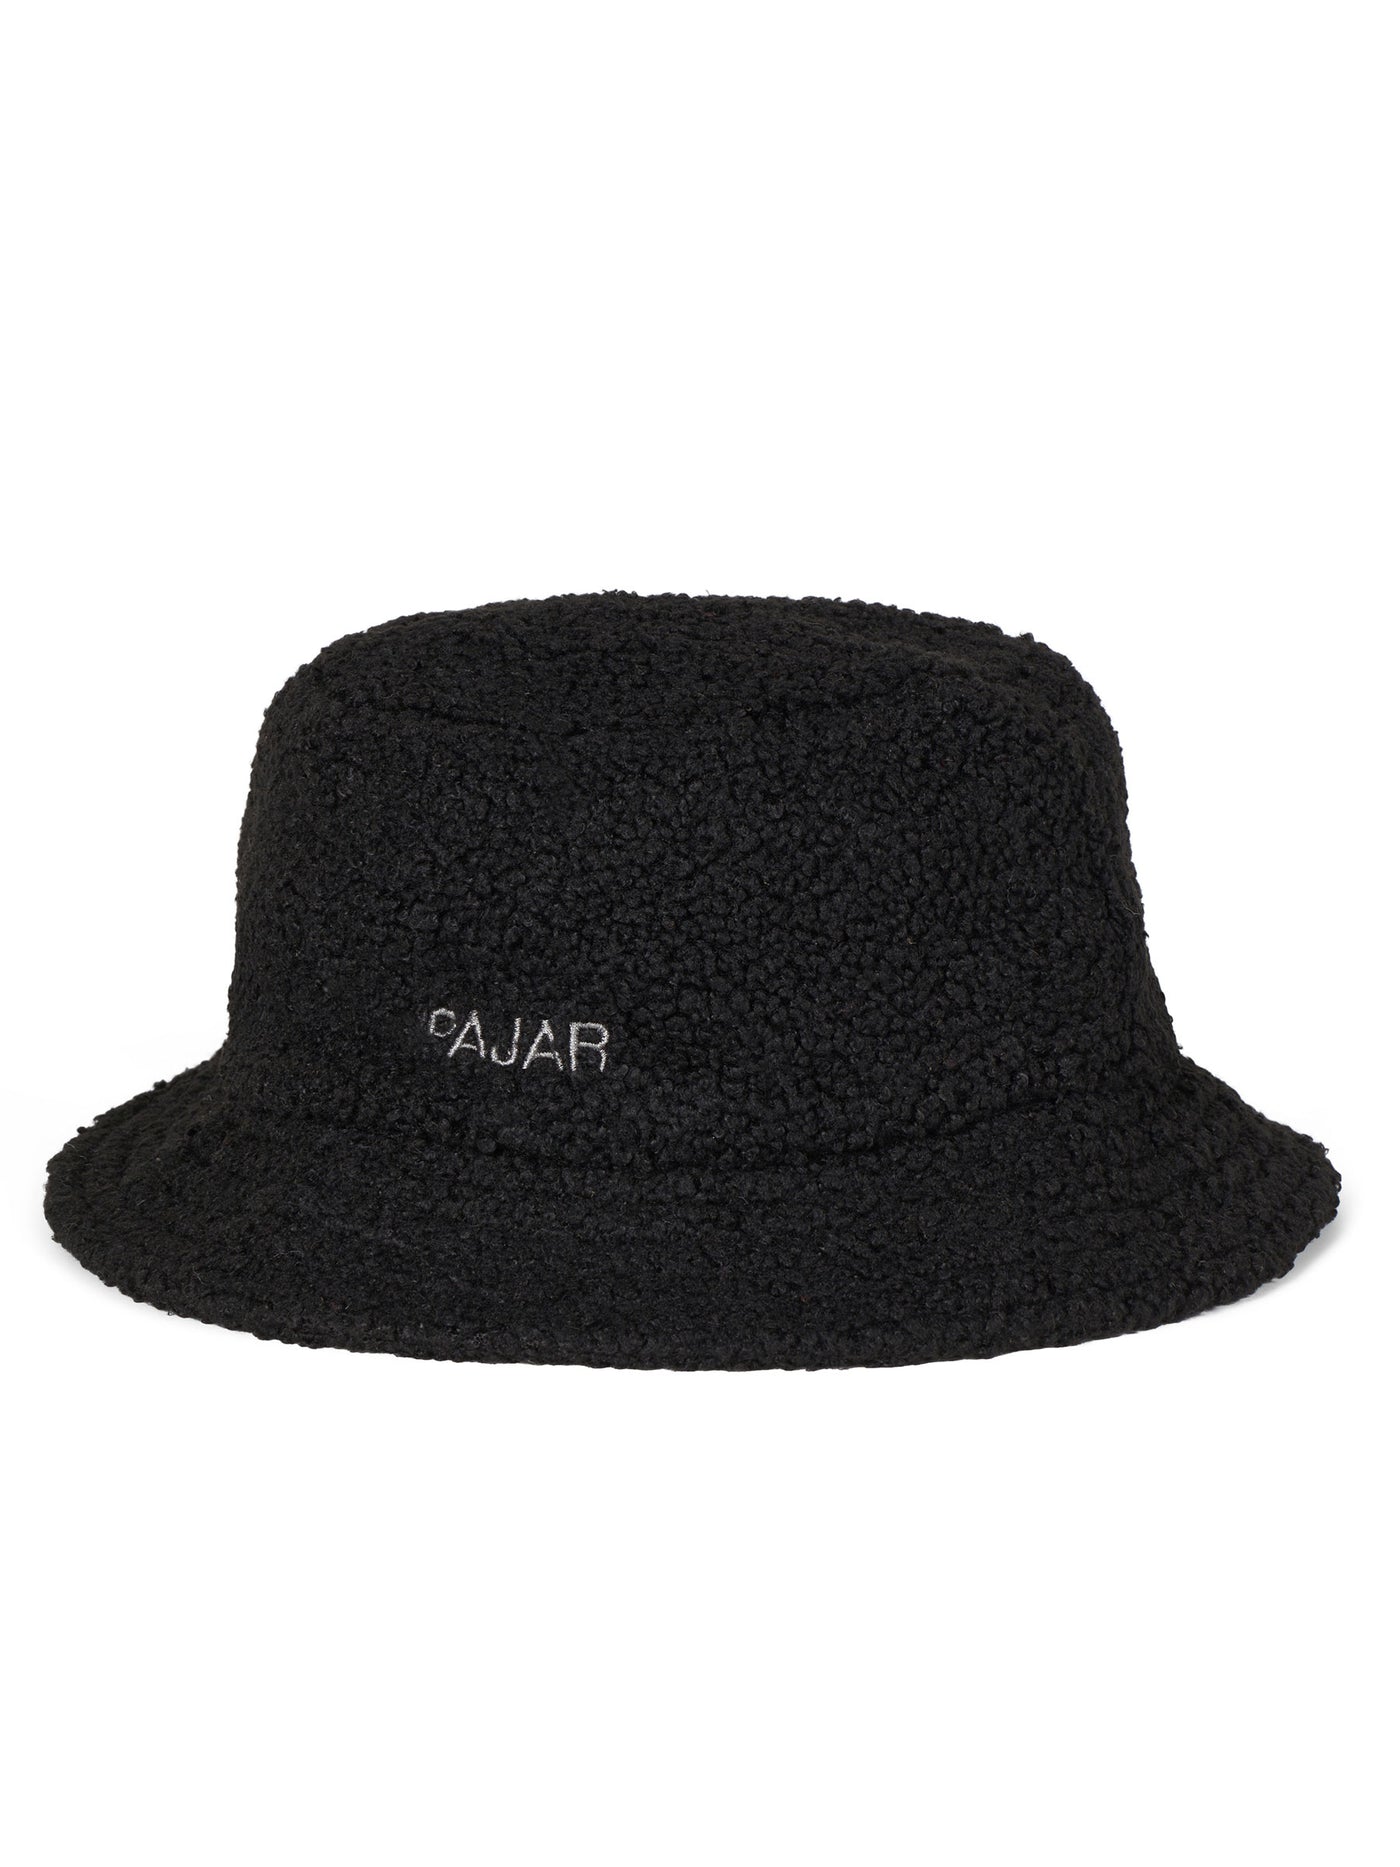 Pajar Hallee Bucket Hat